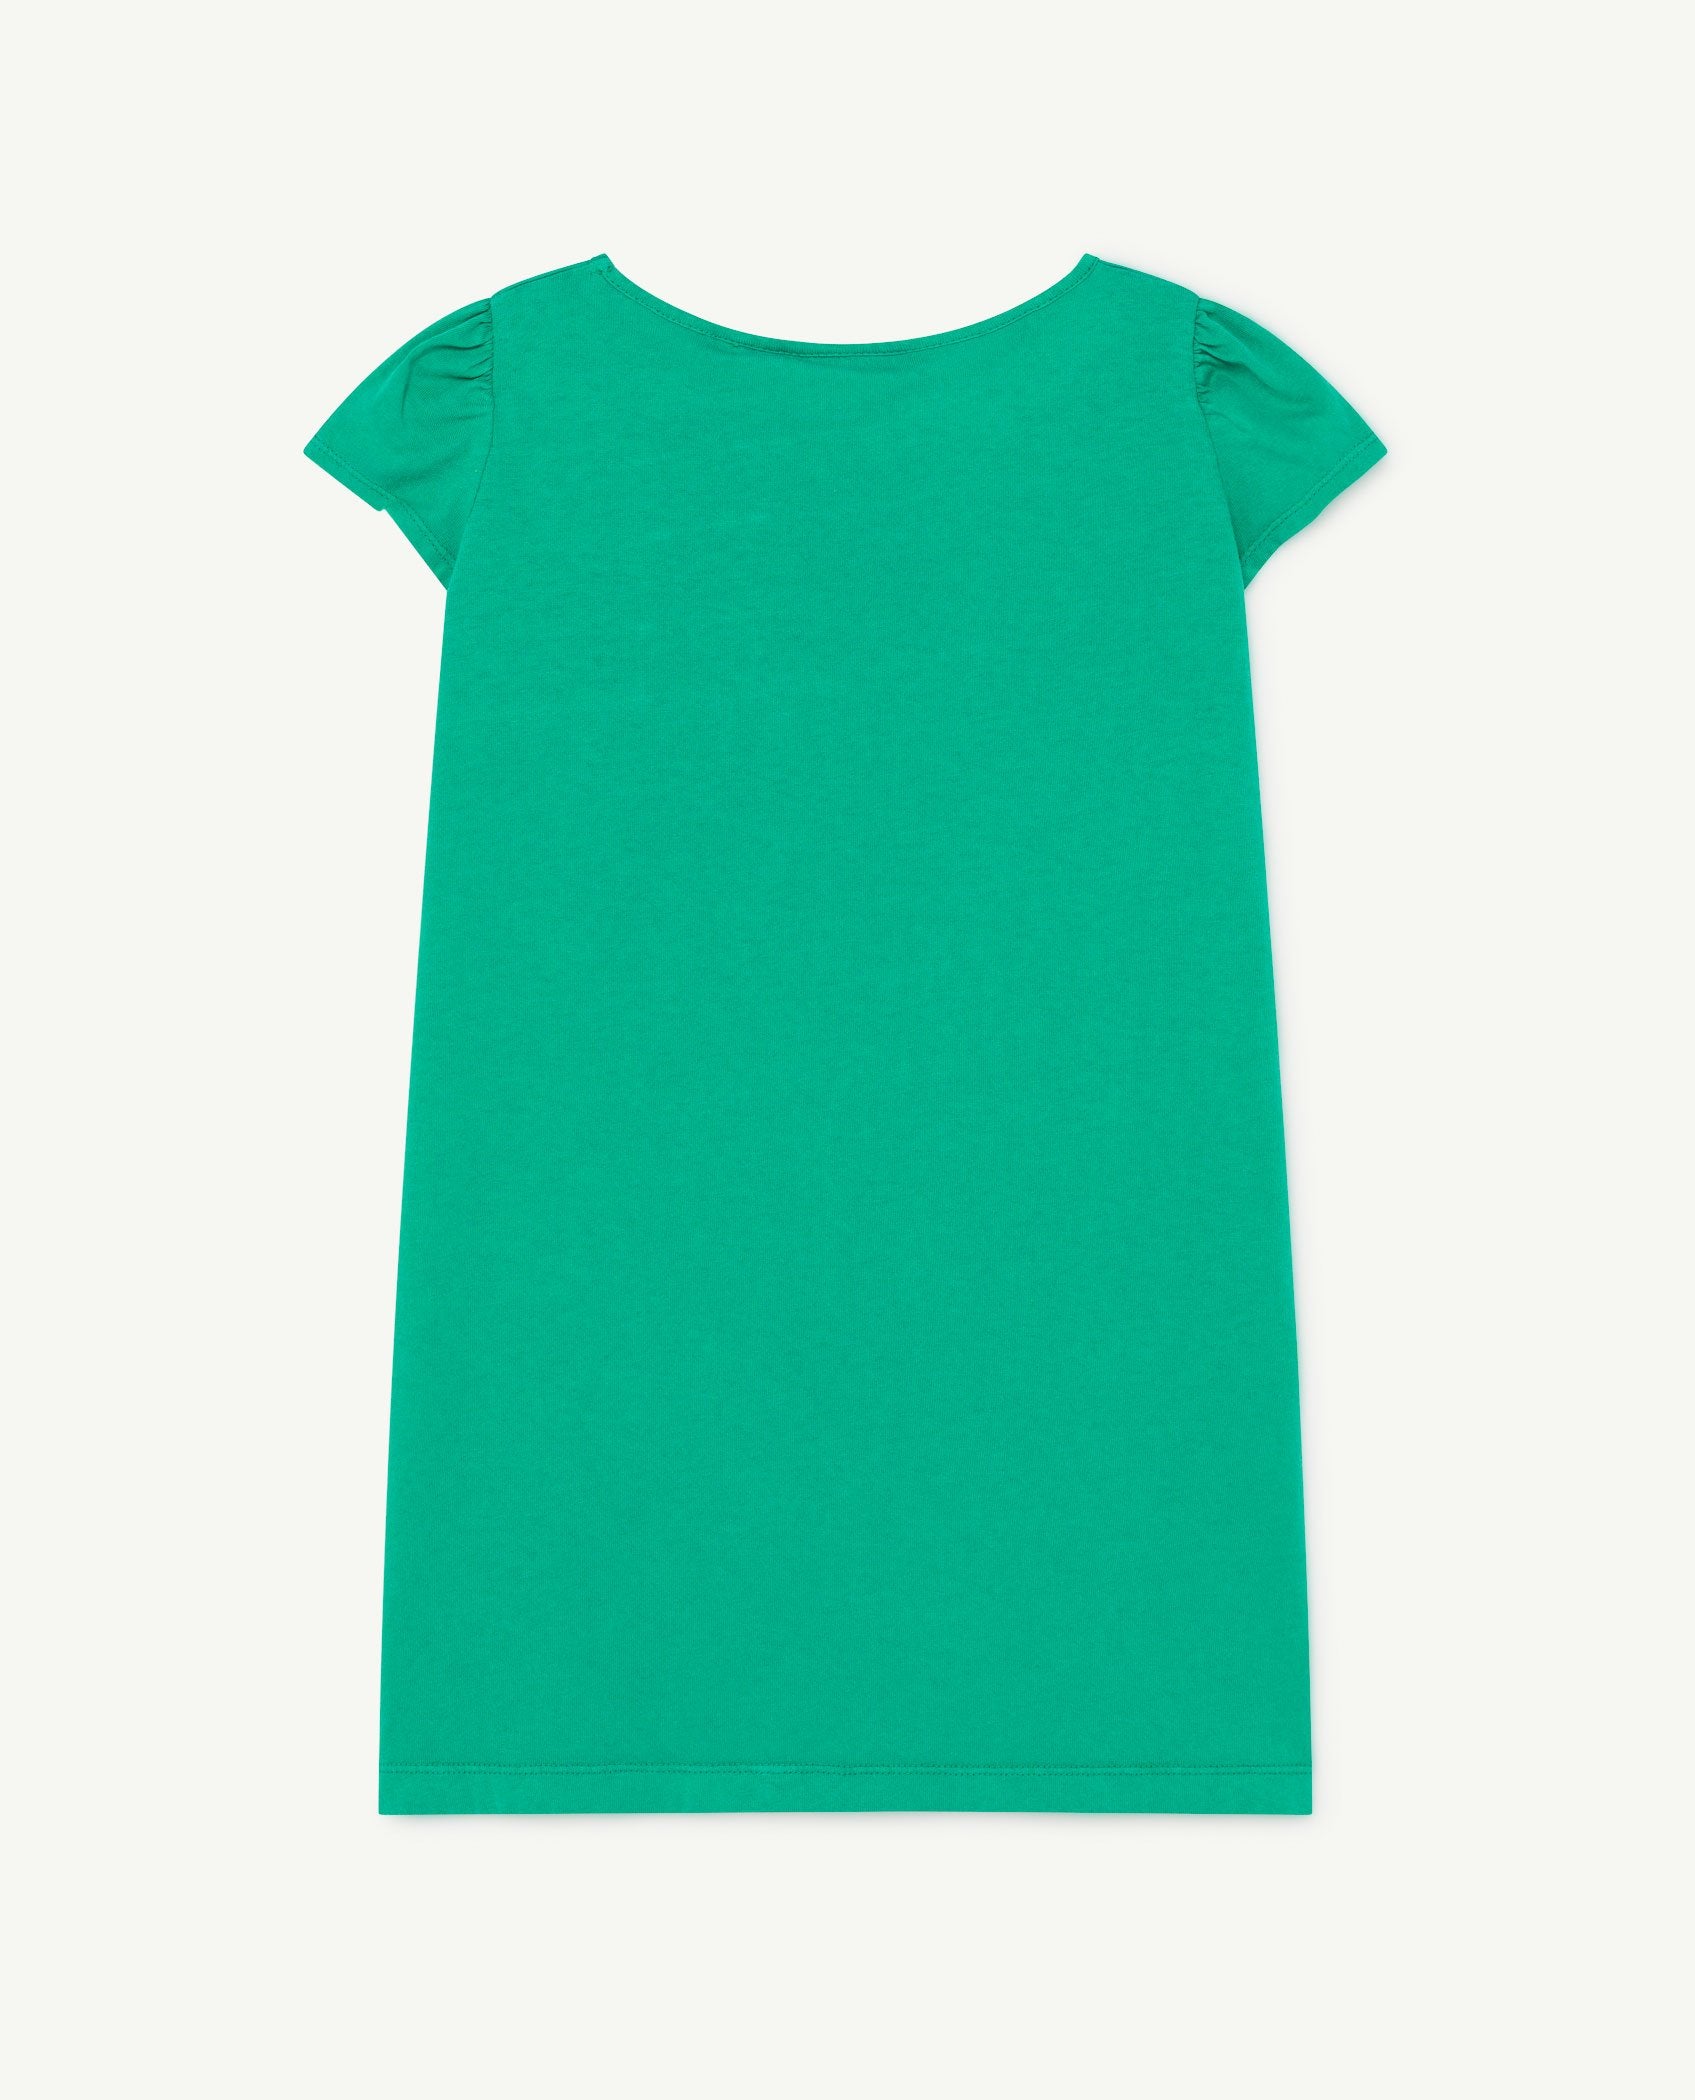 Green Flamingo T-Shirt Dress PRODUCT BACK